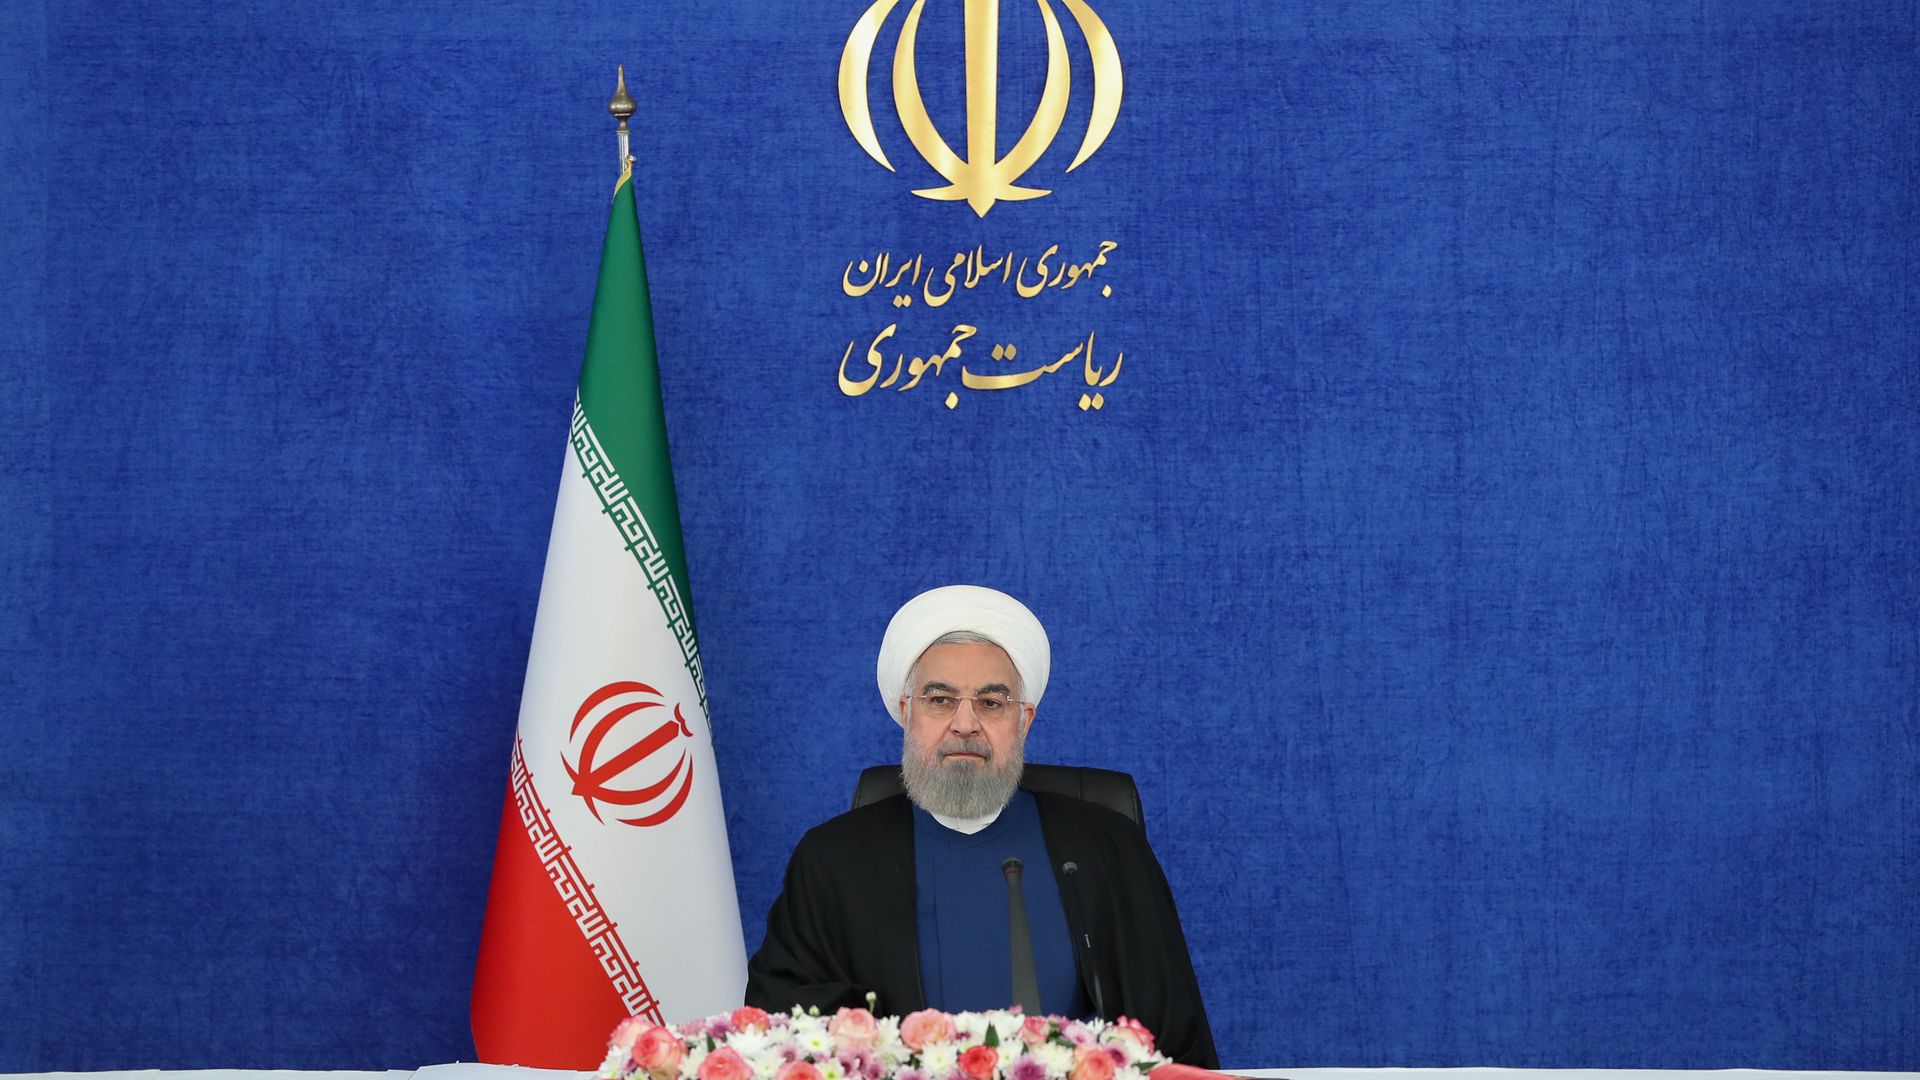 President of Iran, Hassan Rouhani, speaking in Tehran on April 10.